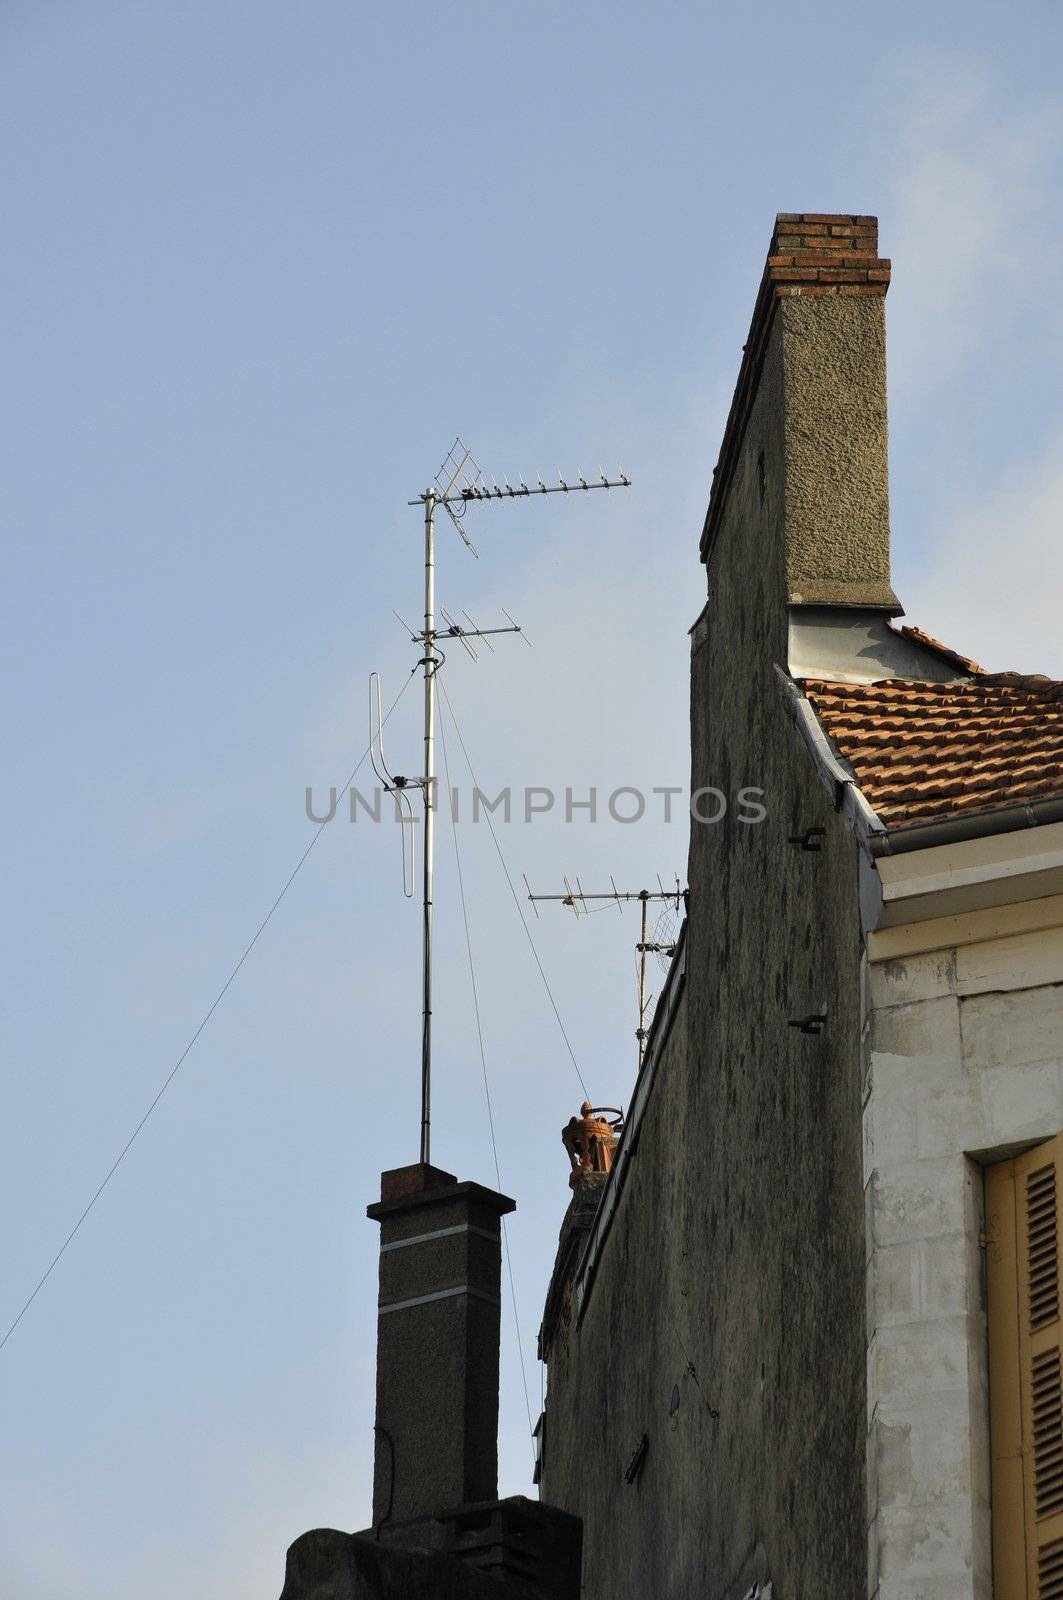 TV antenna on a chimney by shkyo30